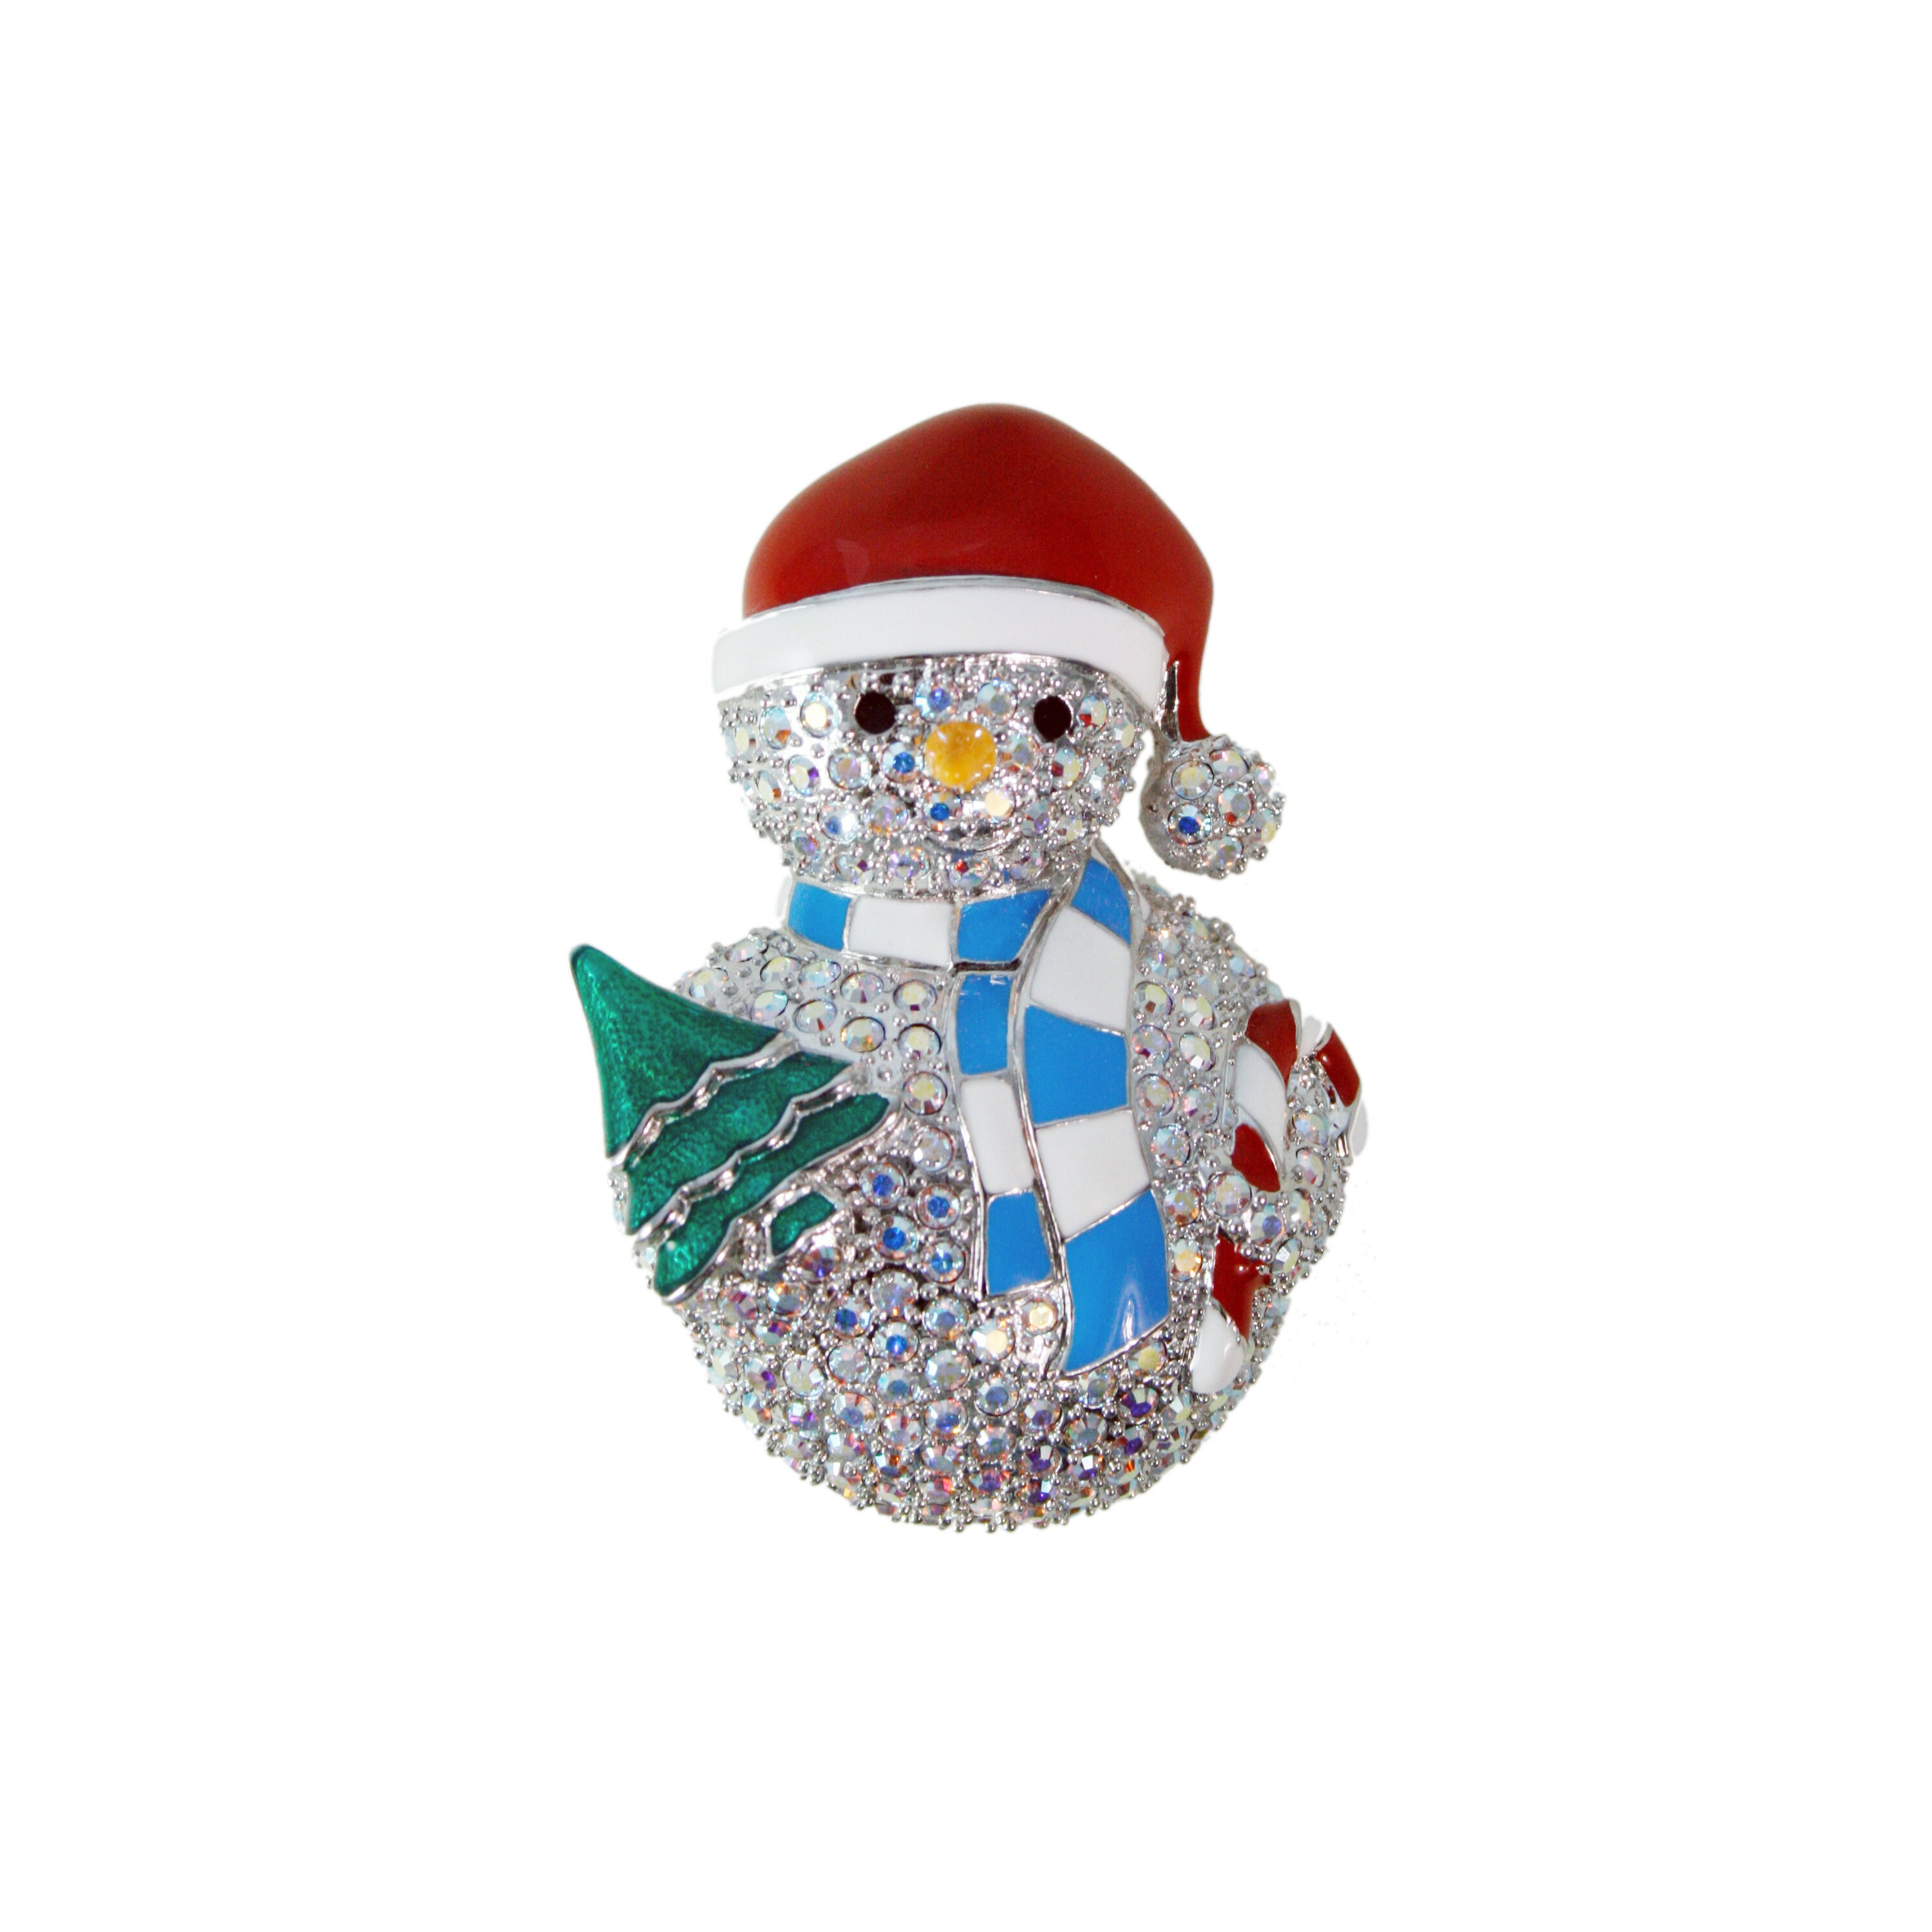  PRETYZOOM 1PC holiday crystal brooch santa claus lapel